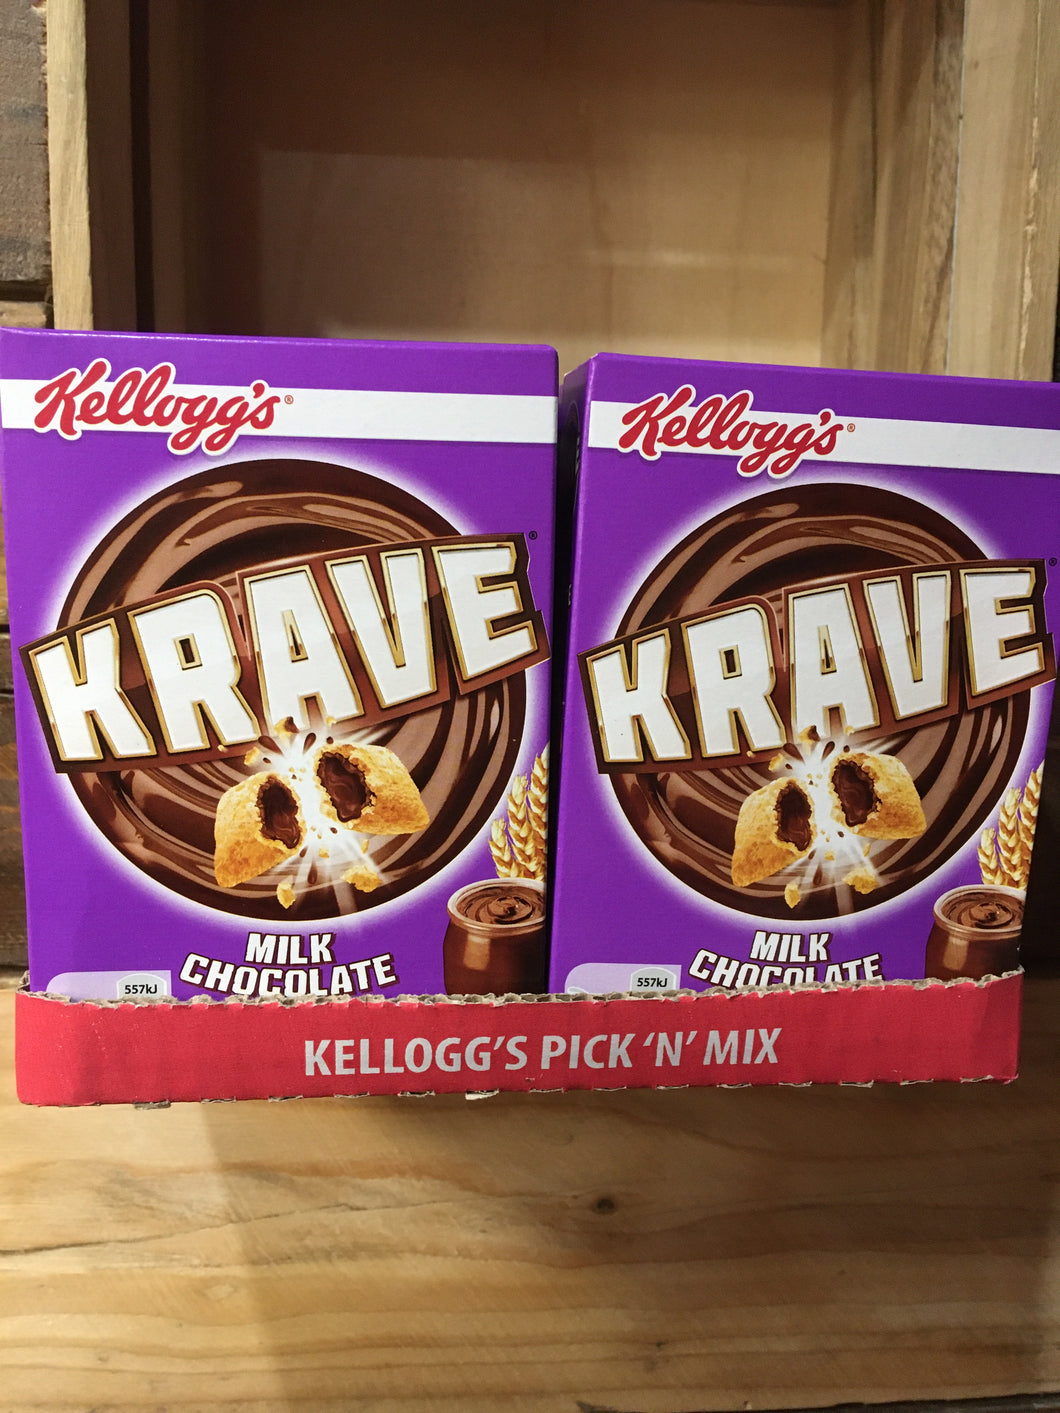 8x Kellogg's Krave Milk Chocolate (8x30g)